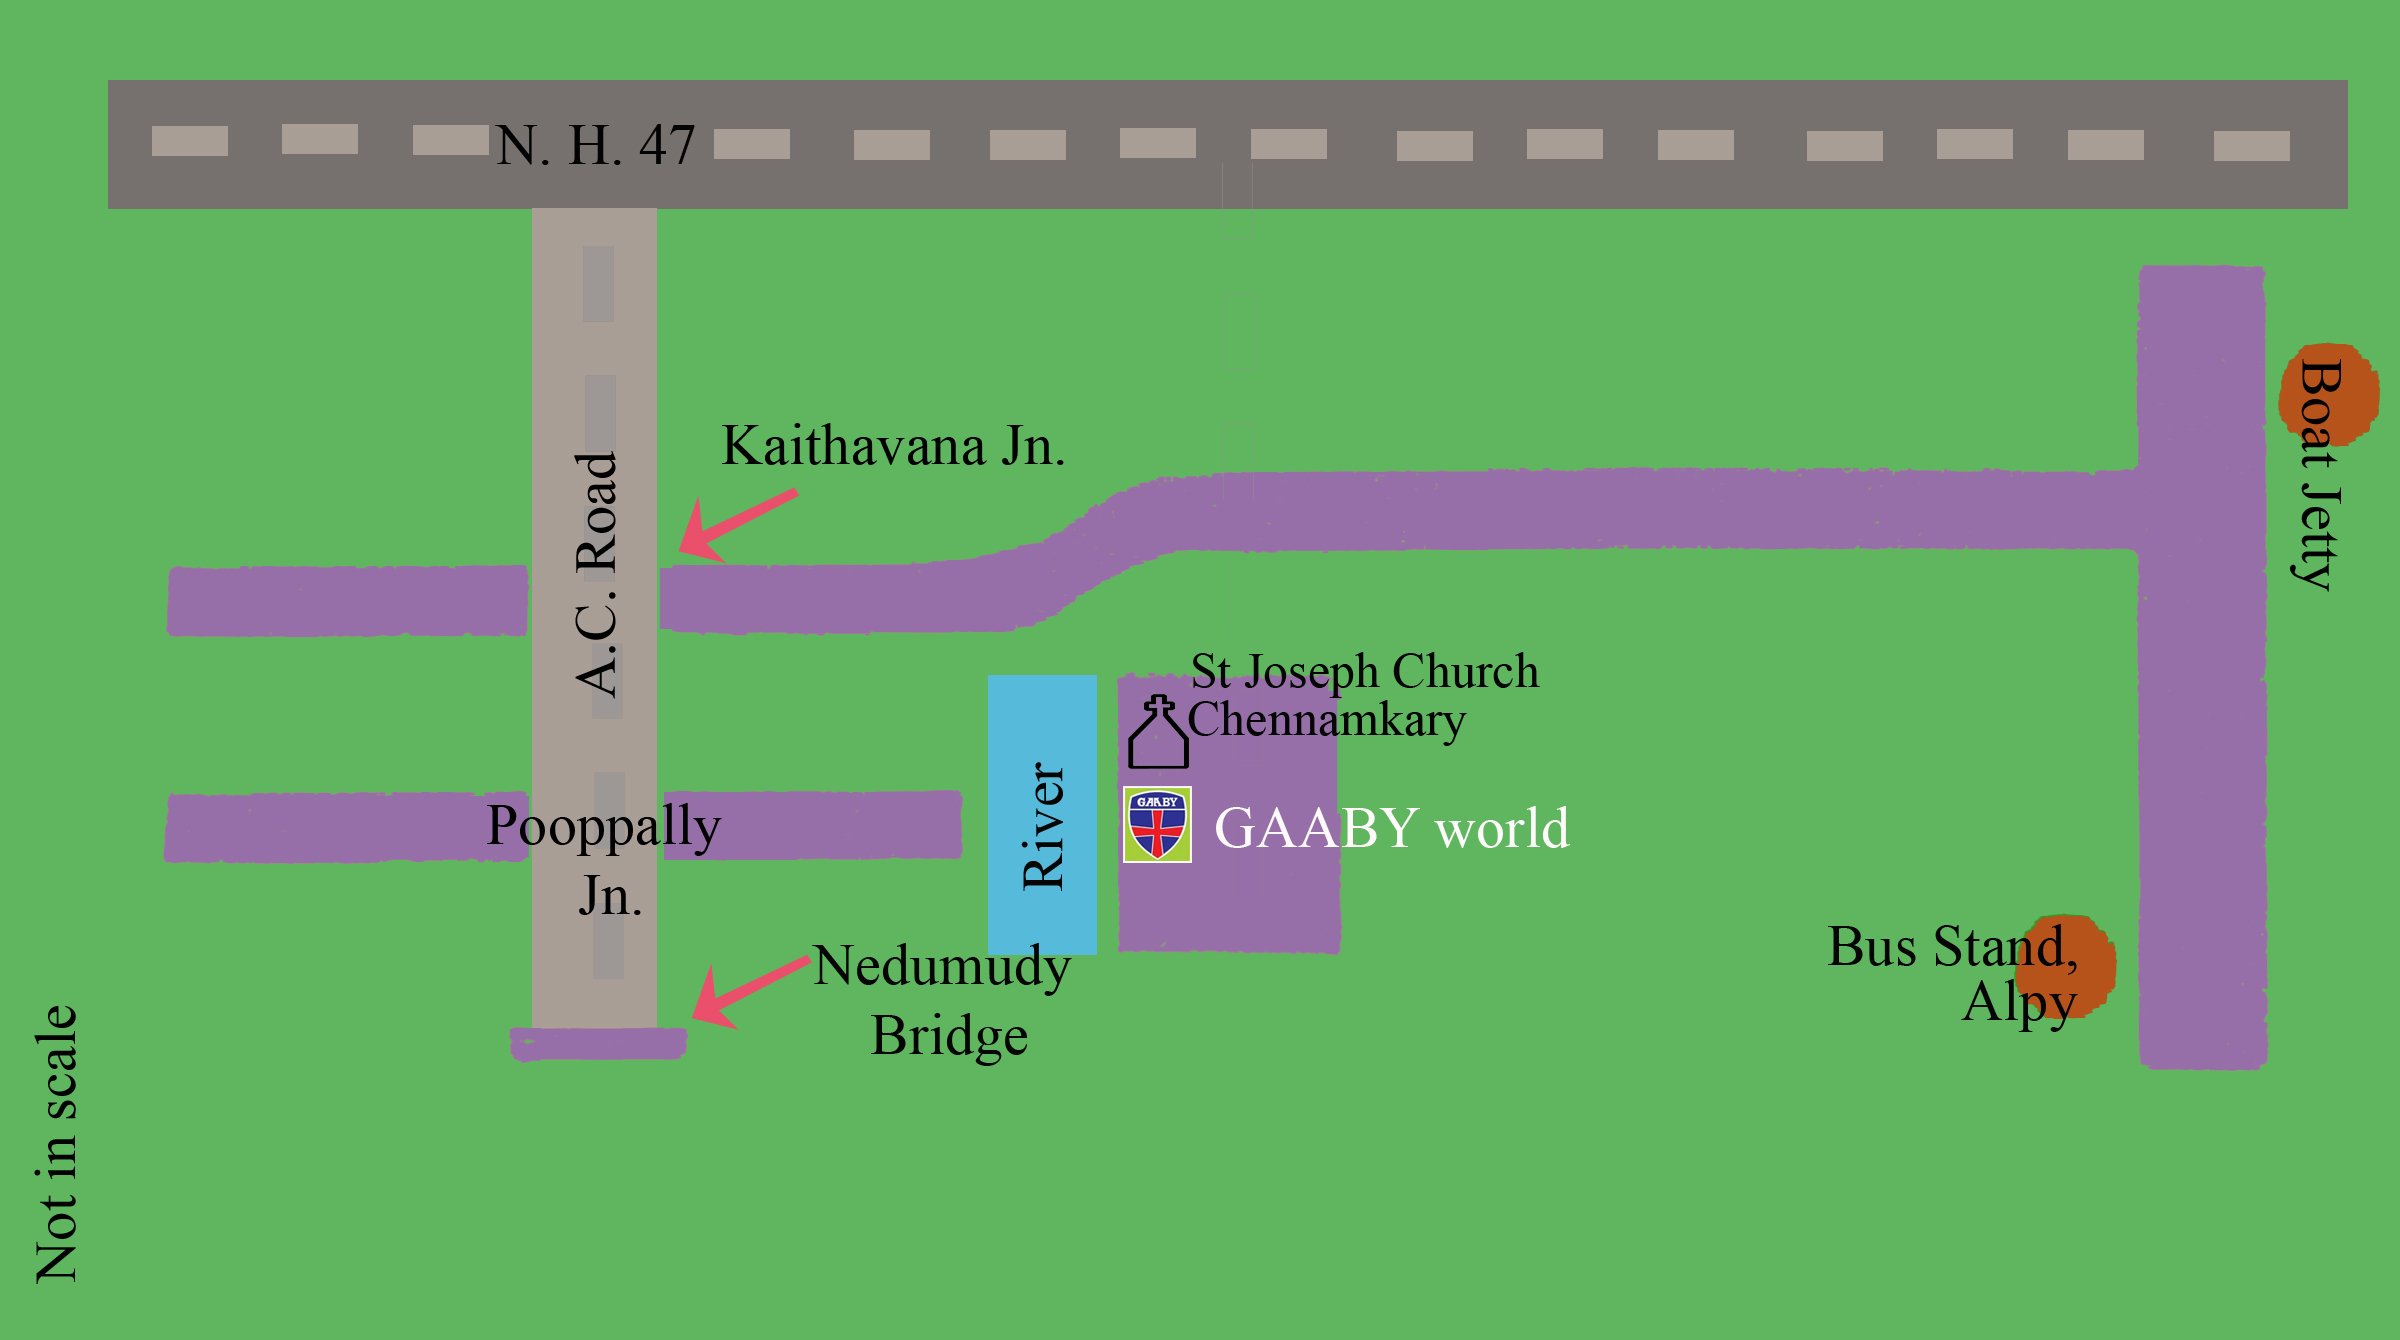 Details of the Gaabyworld